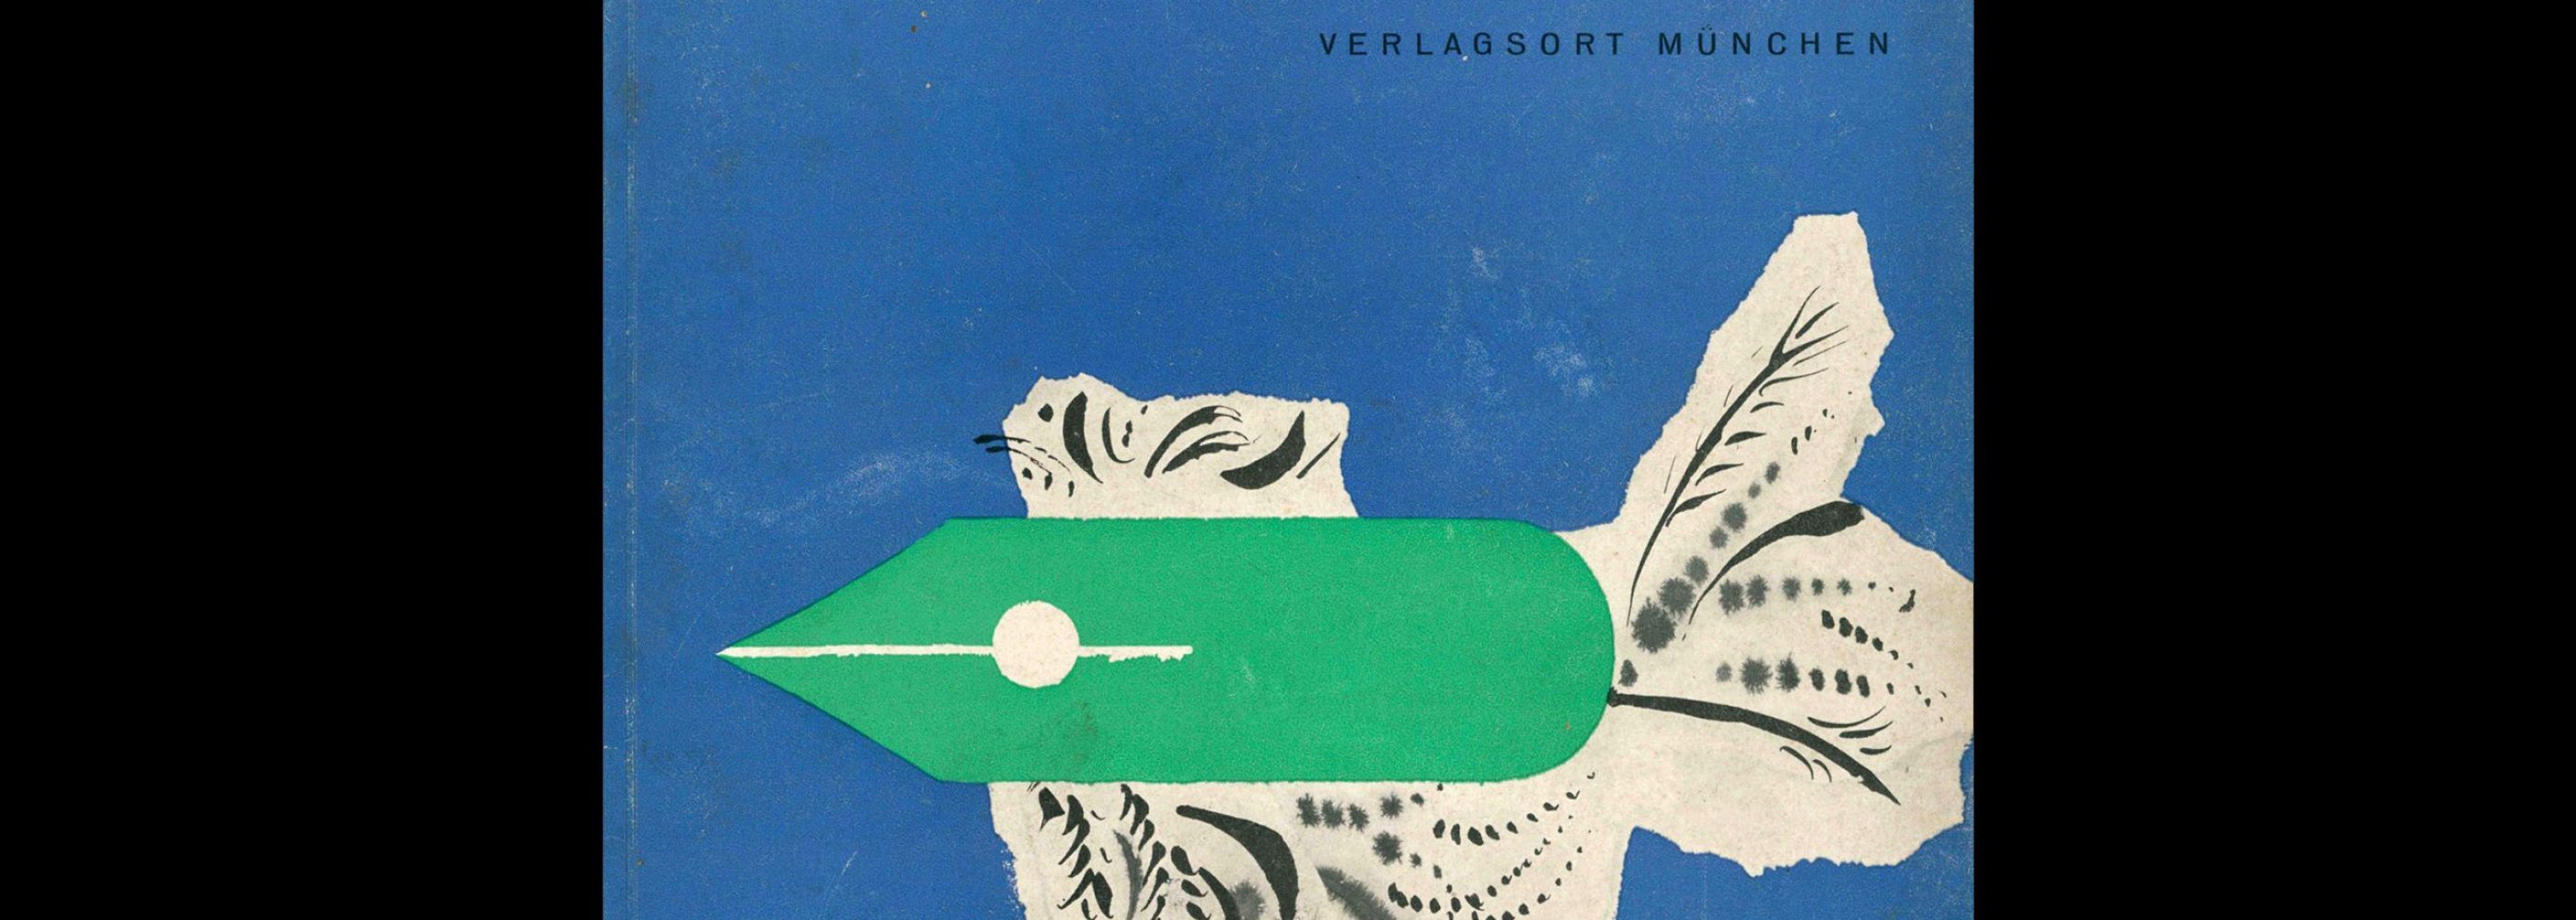 Gebrauchsgraphik, 5, 1956. Cover design by Muller-Blase.